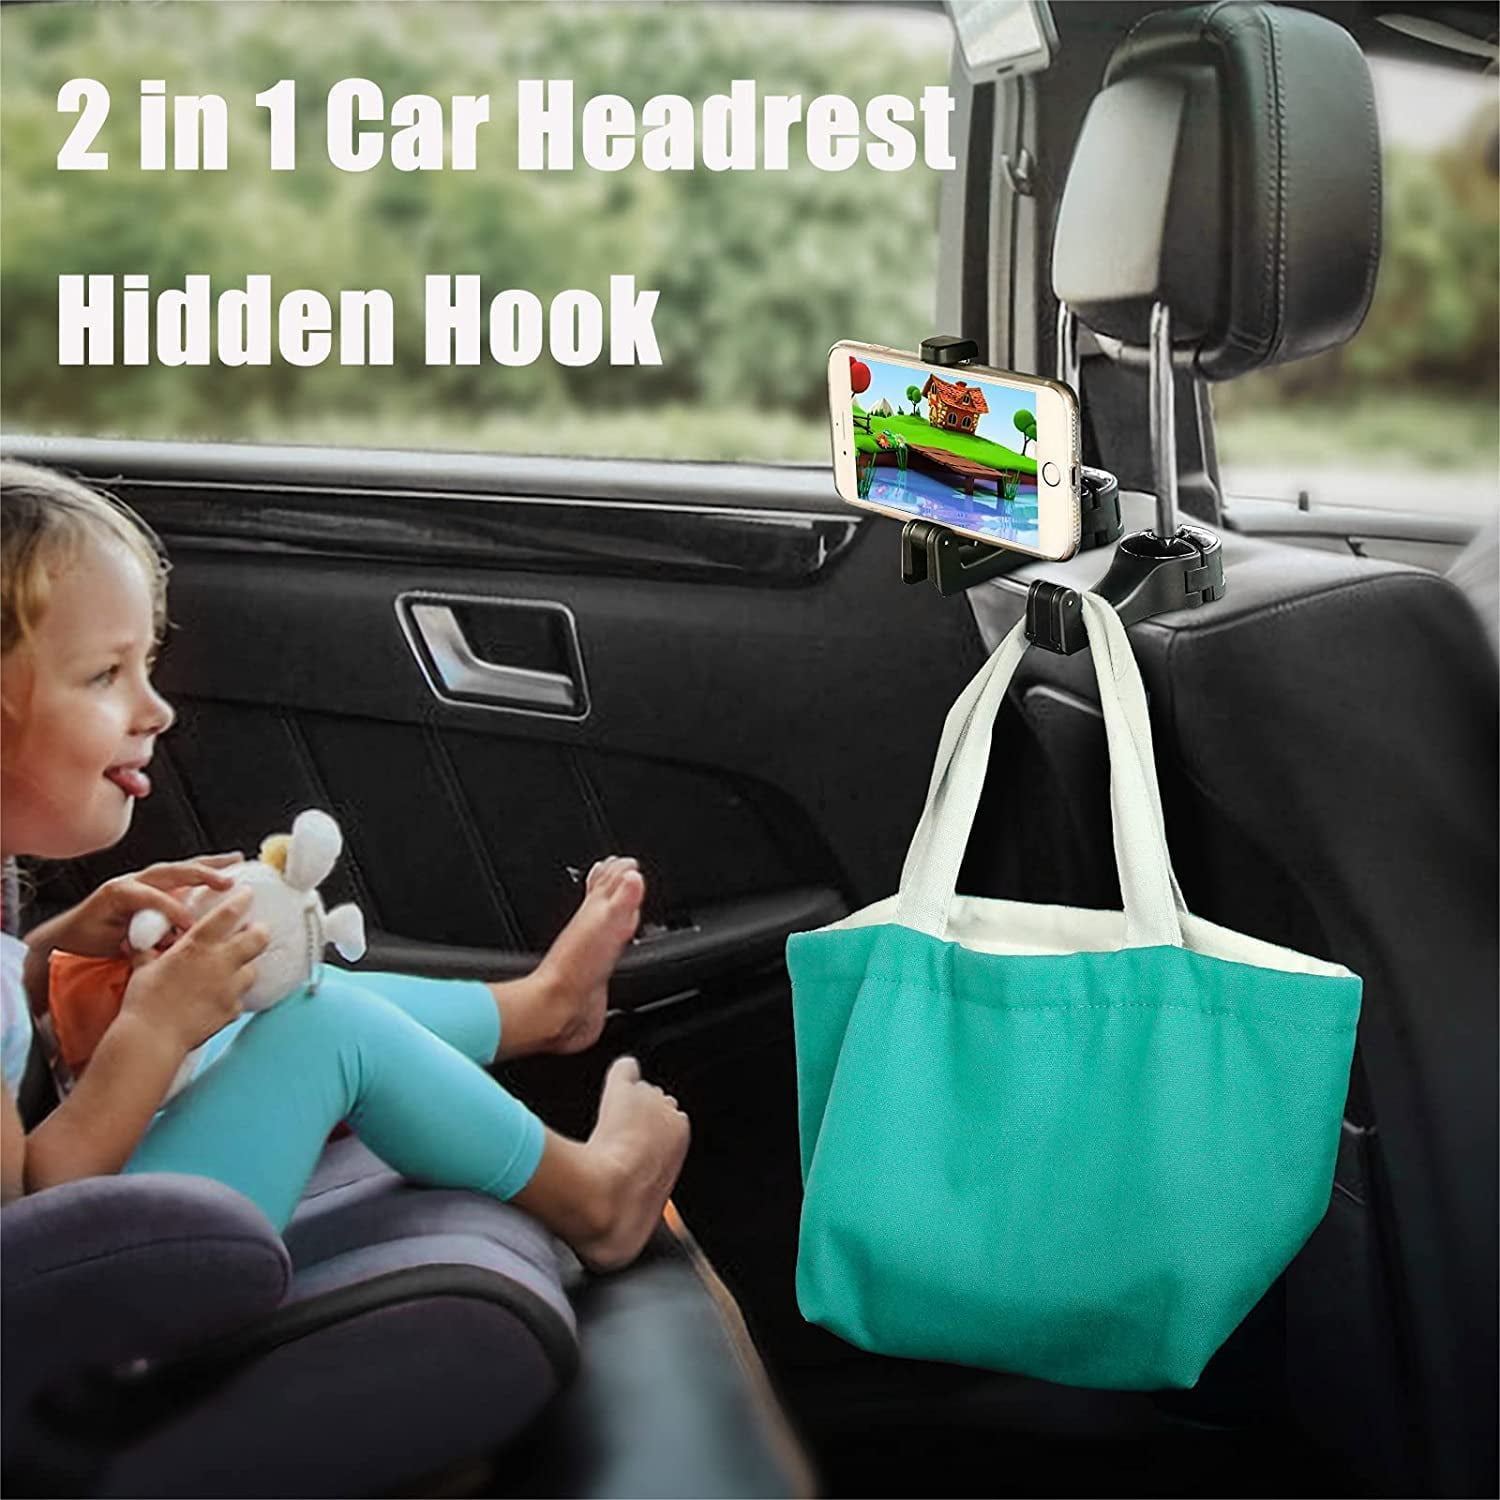 2 in 1 Car Headrest Hidden Hook, 2 in 1 Car Seat Hooks with Phone